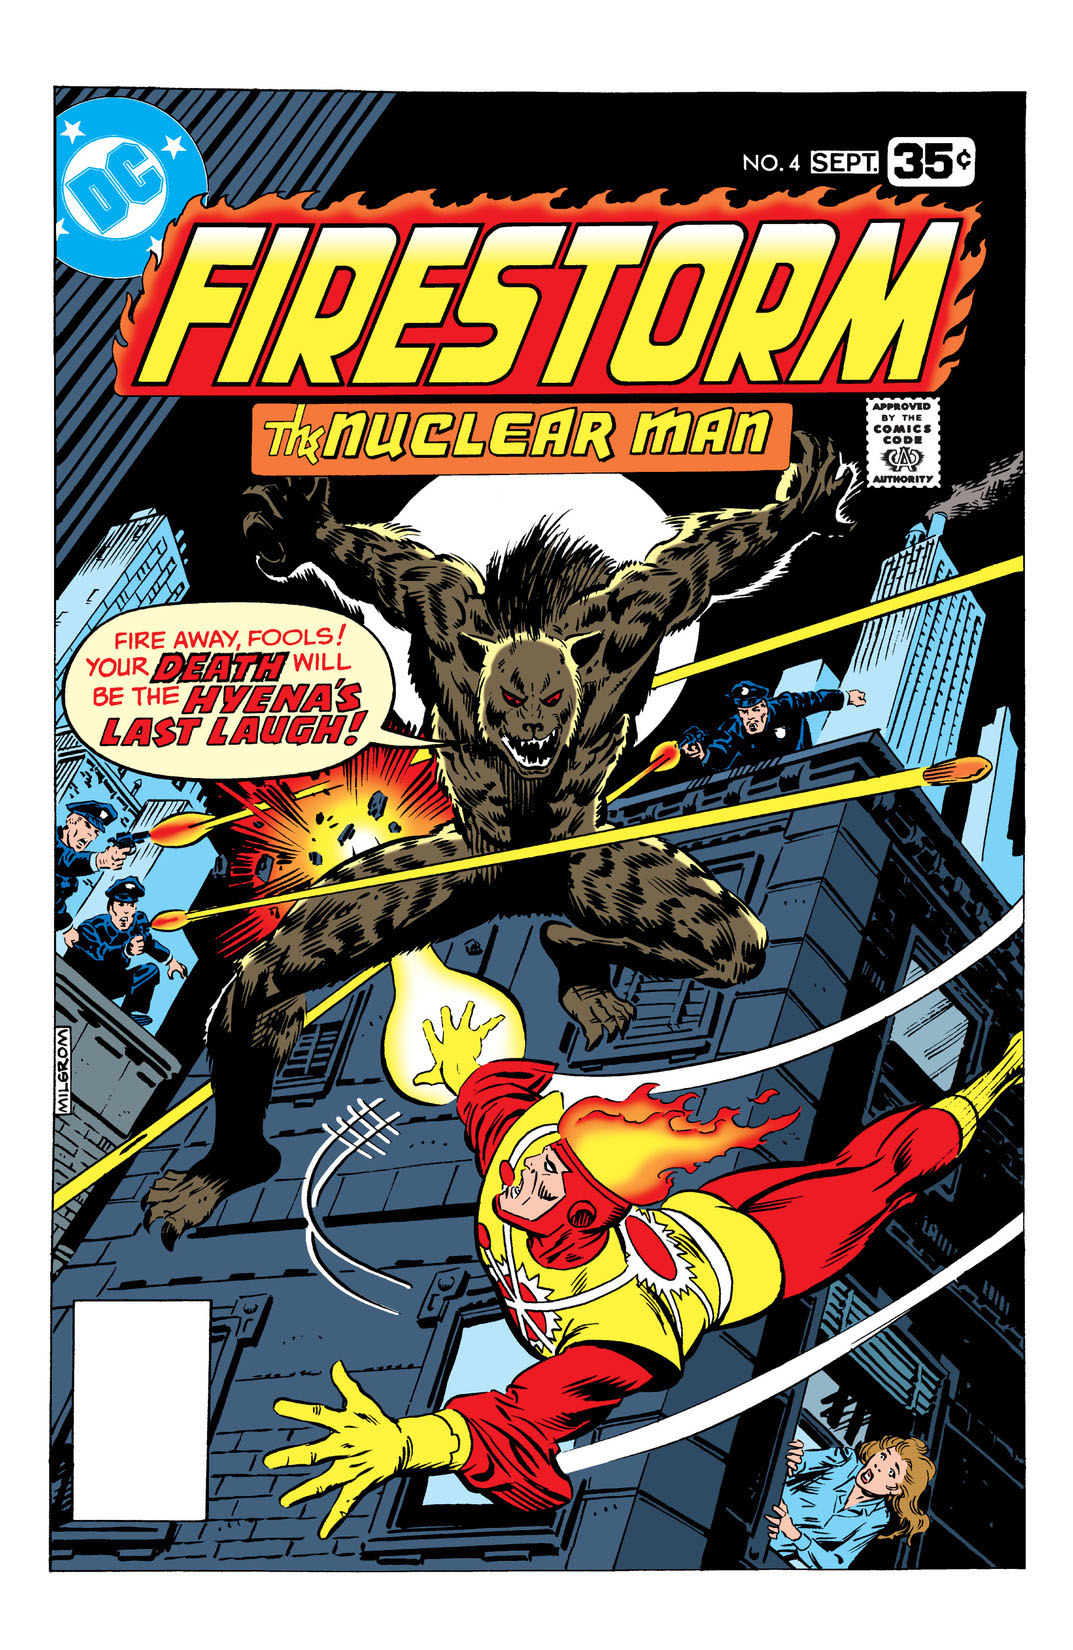 Firestorm #4 preview images